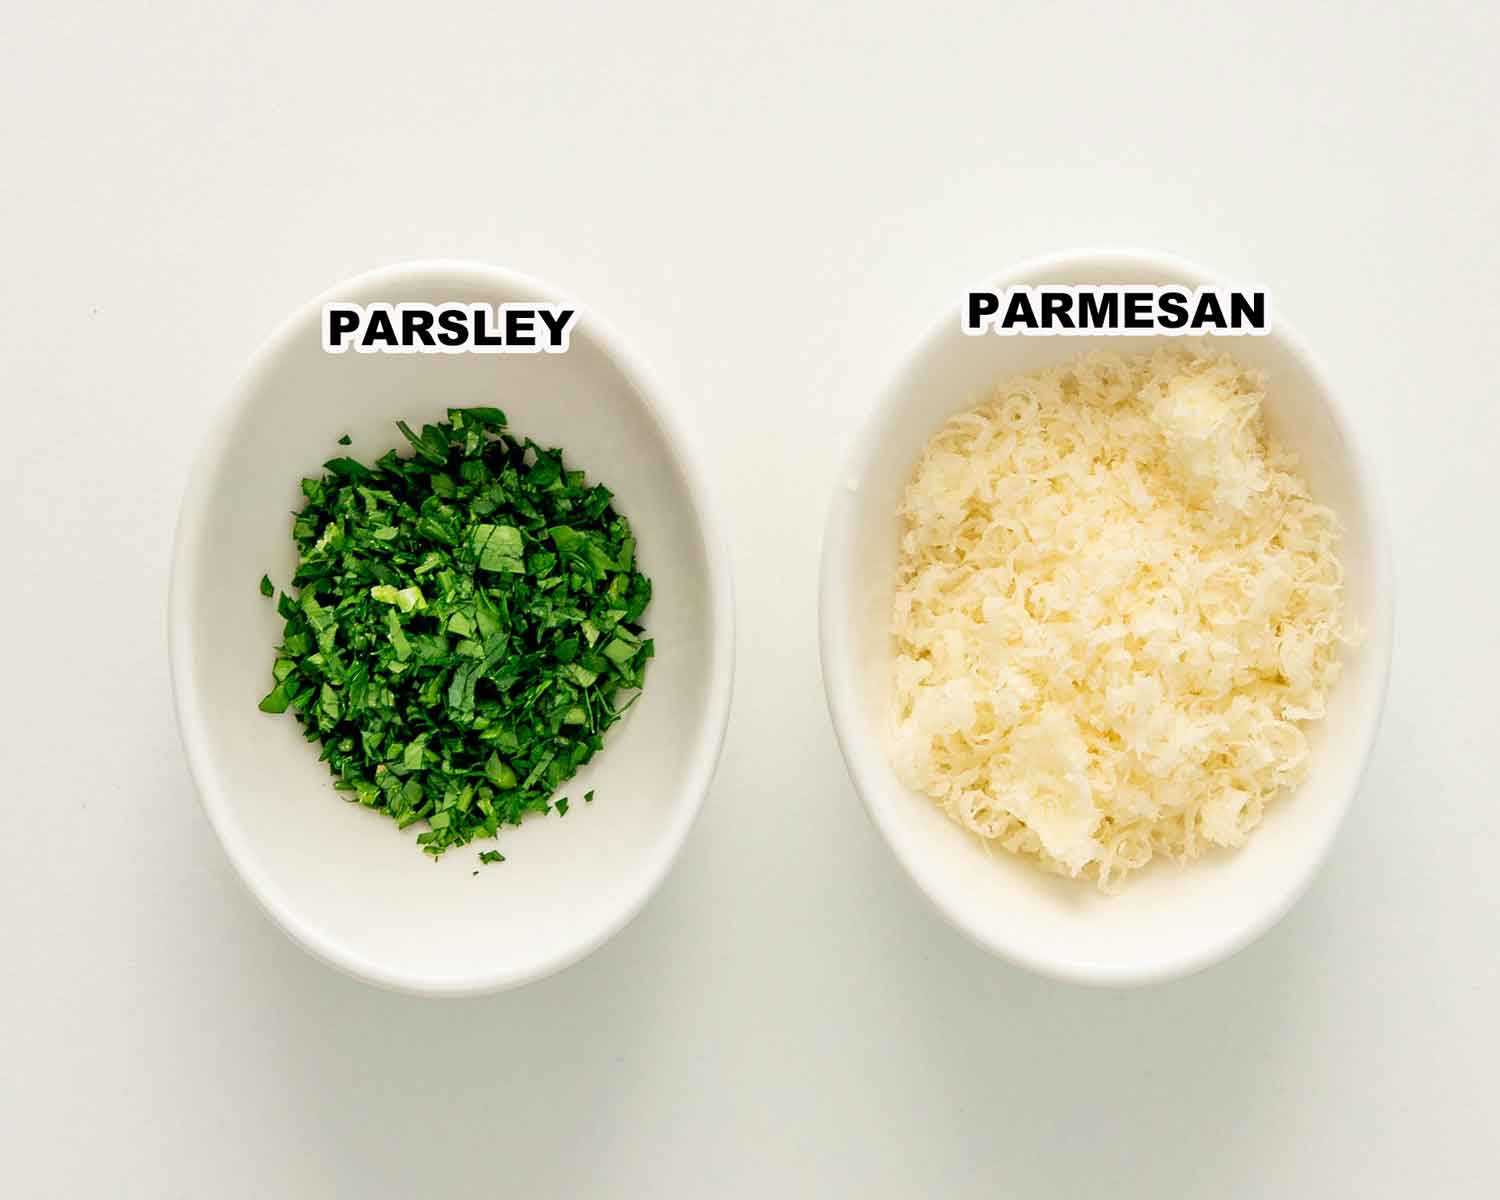 ingredients needed to make garlic parmesan wings.